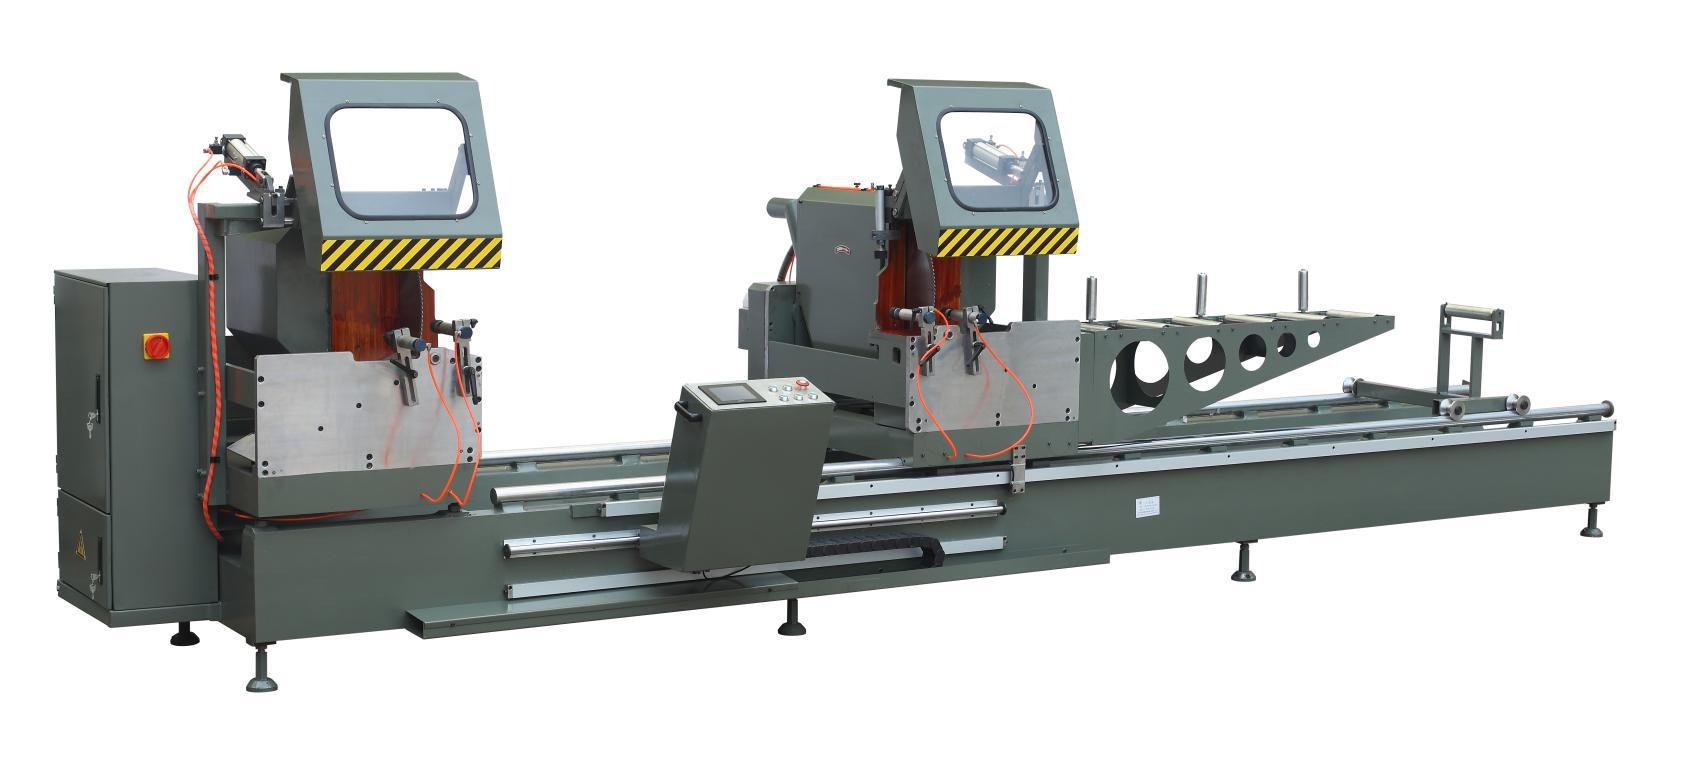 kingtool aluminium machinery KT-383F/B DIGITAL DISPLAY DOUBLE MITRE SAW Aluminum Cutting Machine image2